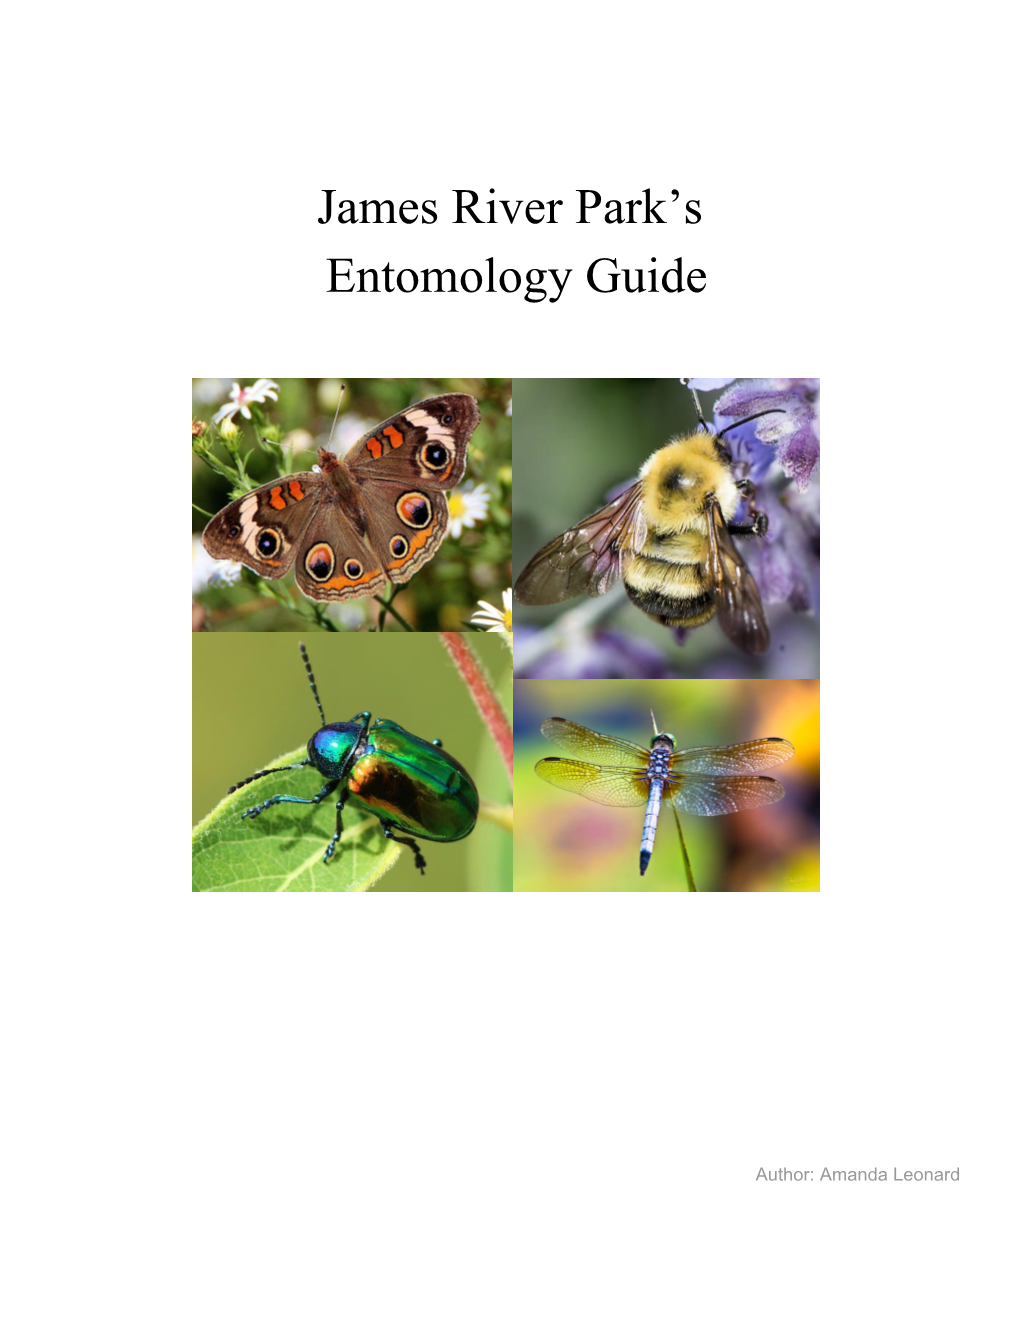 James River Park's Entomology Guide